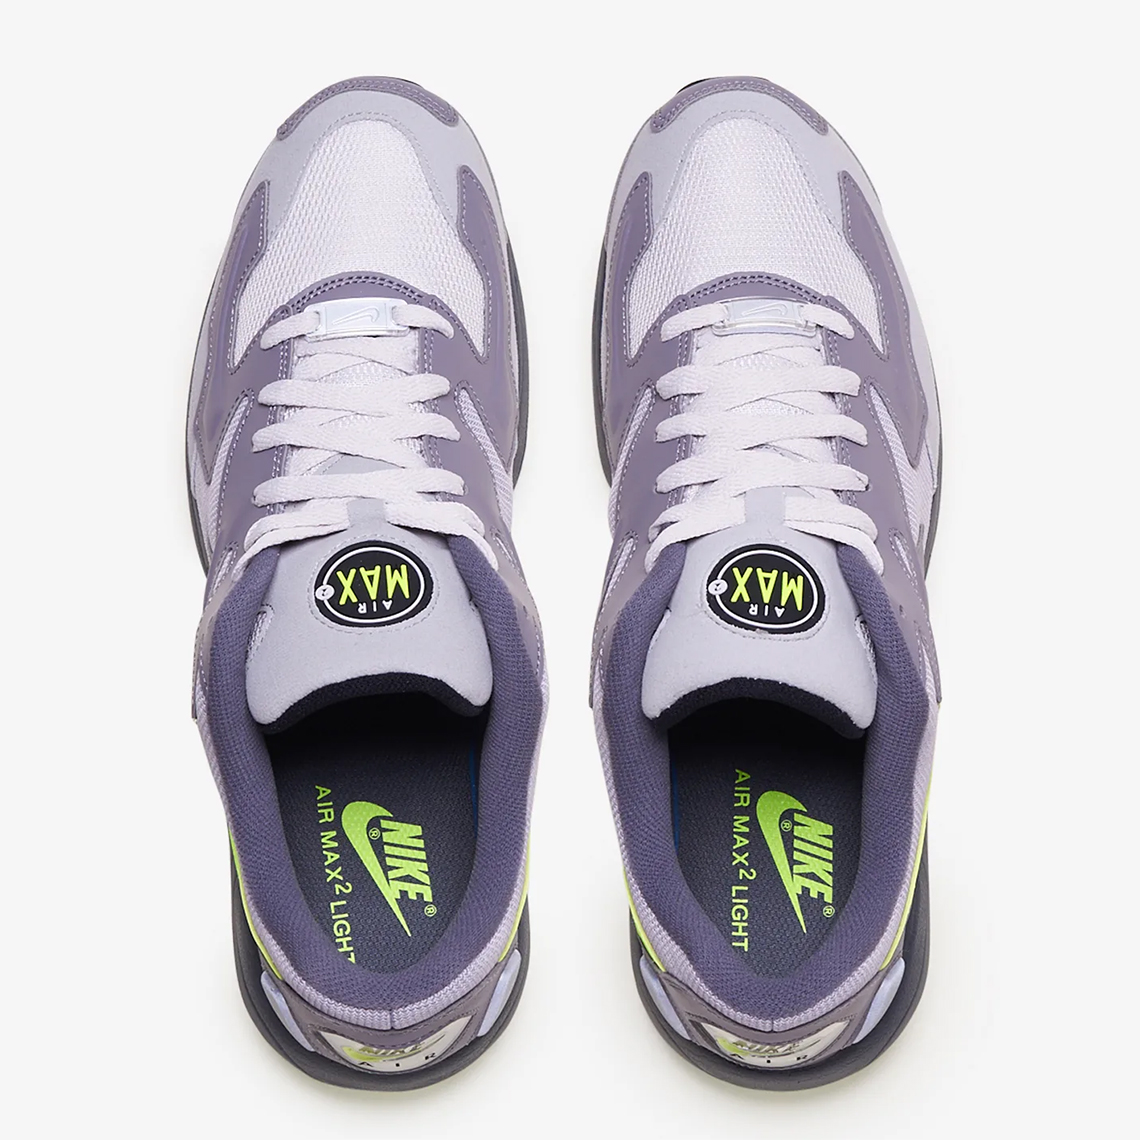 Nike Air Max 2 Light Neon CJ Release Date   SneakerNews.com